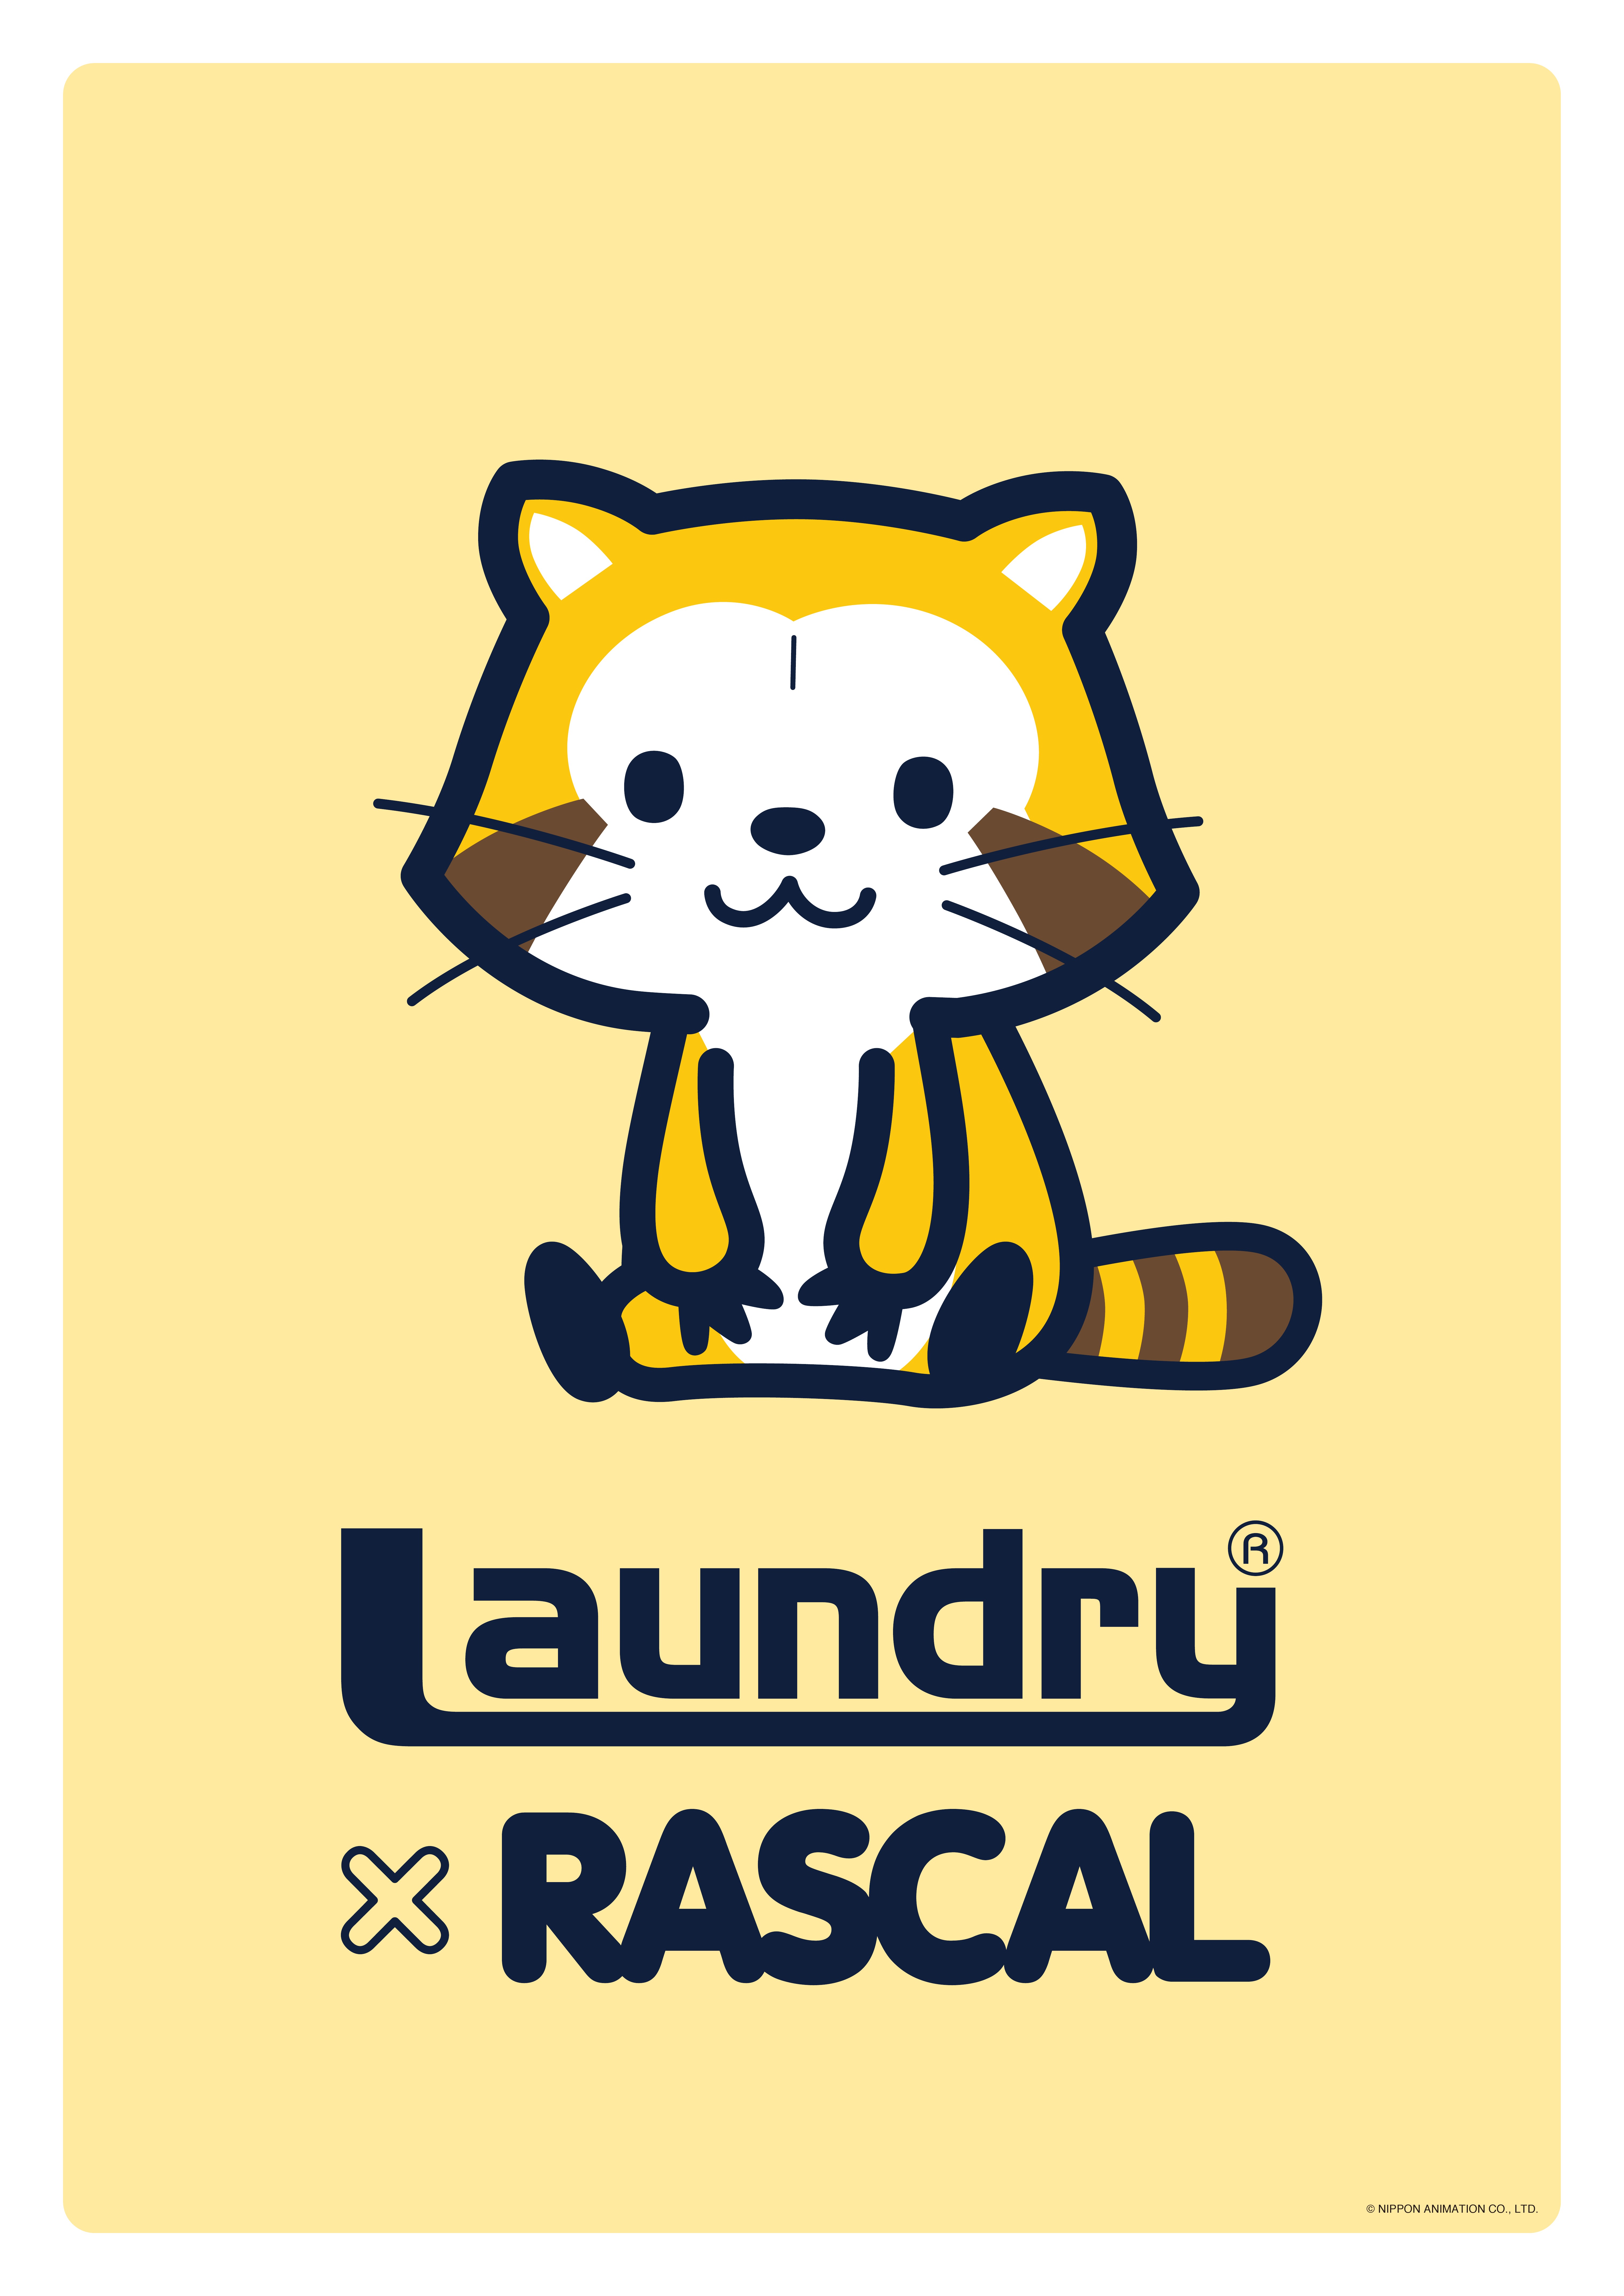 Laundry ラスカル コラボアイテム第4弾の発売が決定 1月22日 金 より全国のlaundry店舗 オンラインストアにて販売開始 Newscast